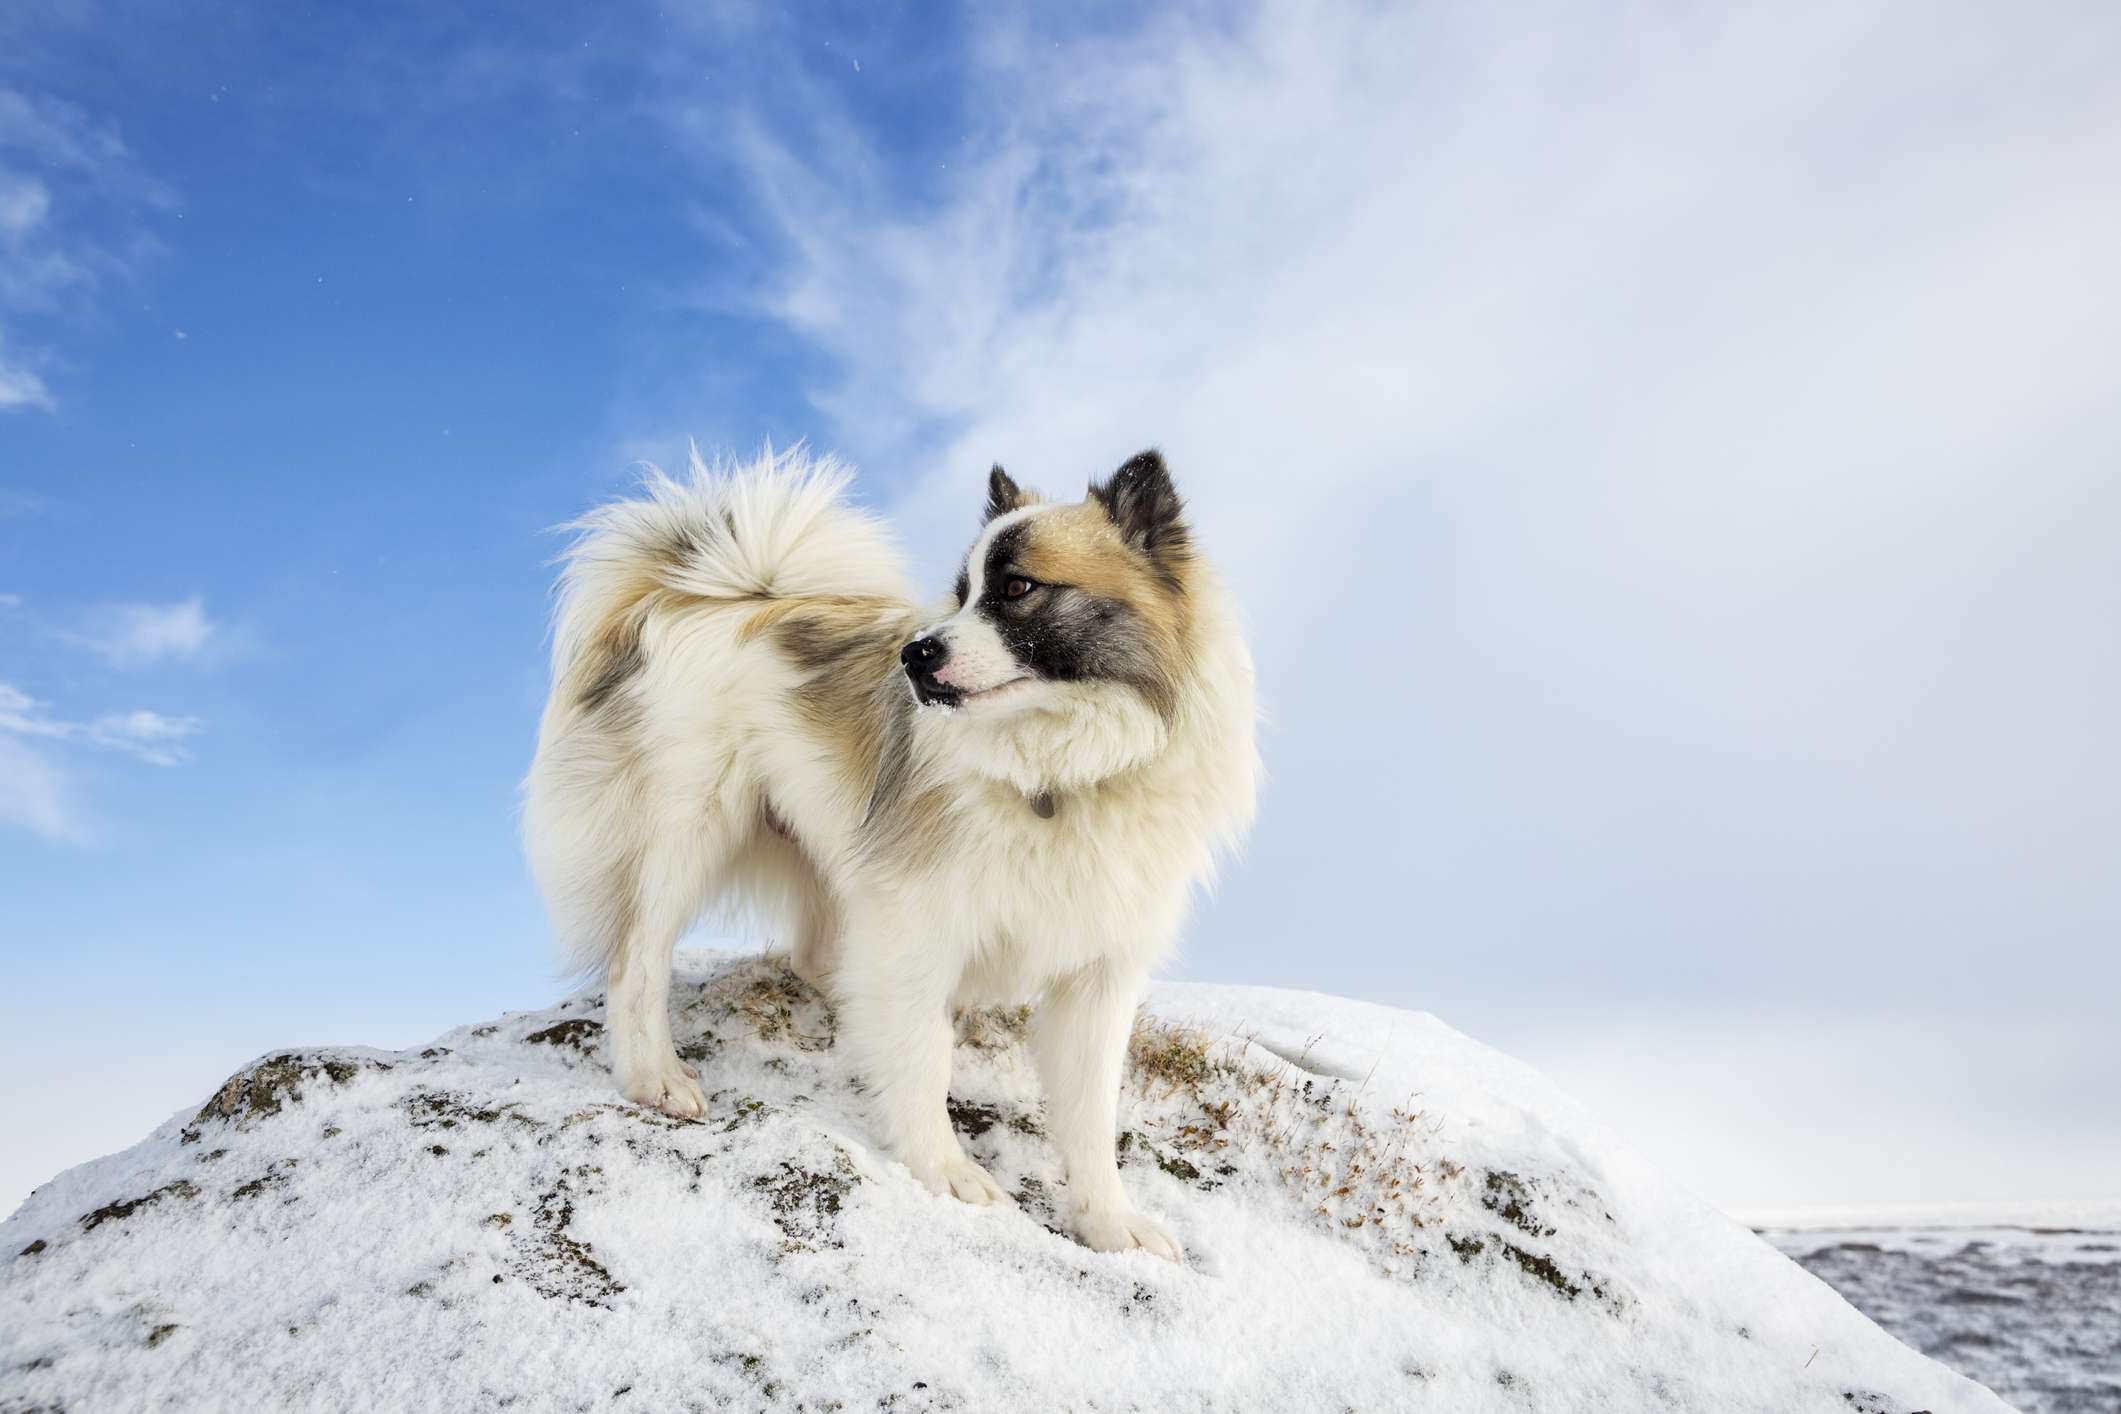 Icelandic Sheepdog standing on a snowy peak